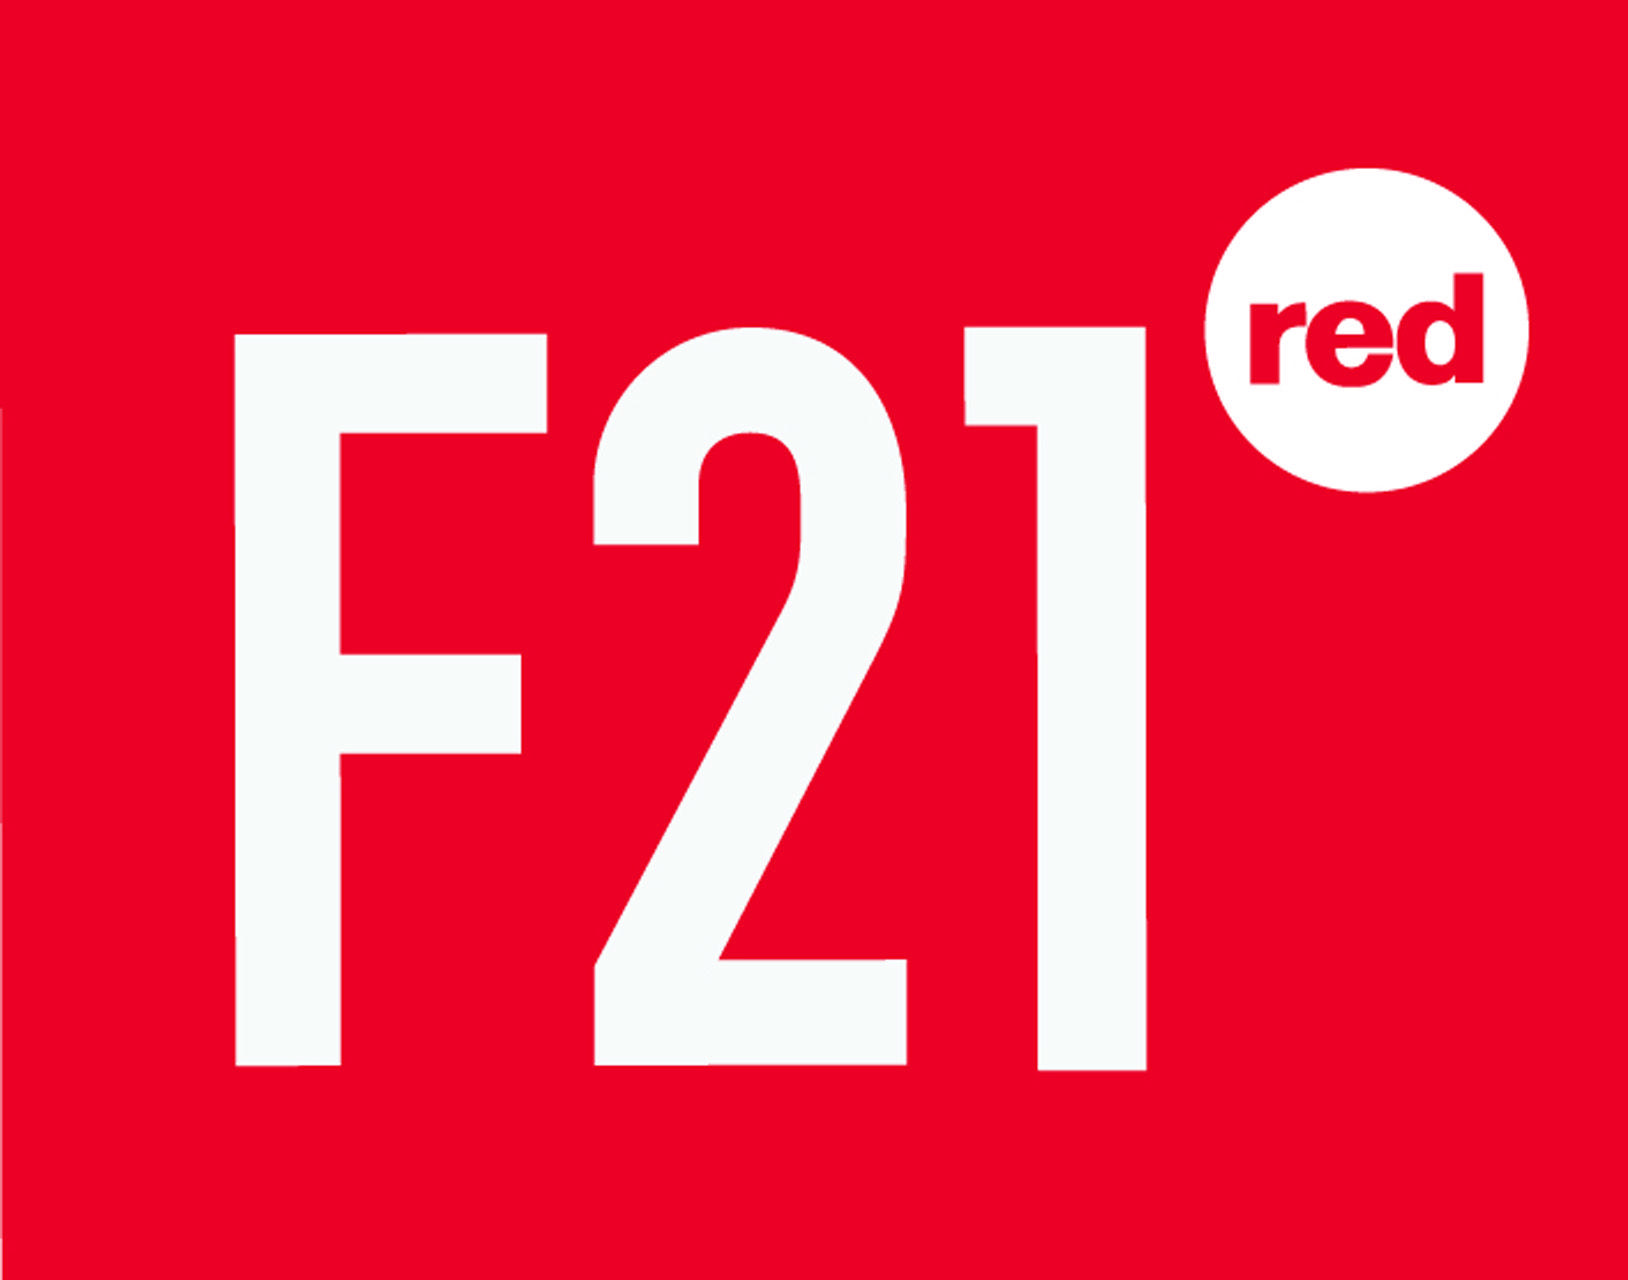 Red Forever 21 Logo - Forever 21 Bringing New 'Red' Concept to Flushing – Commercial Observer